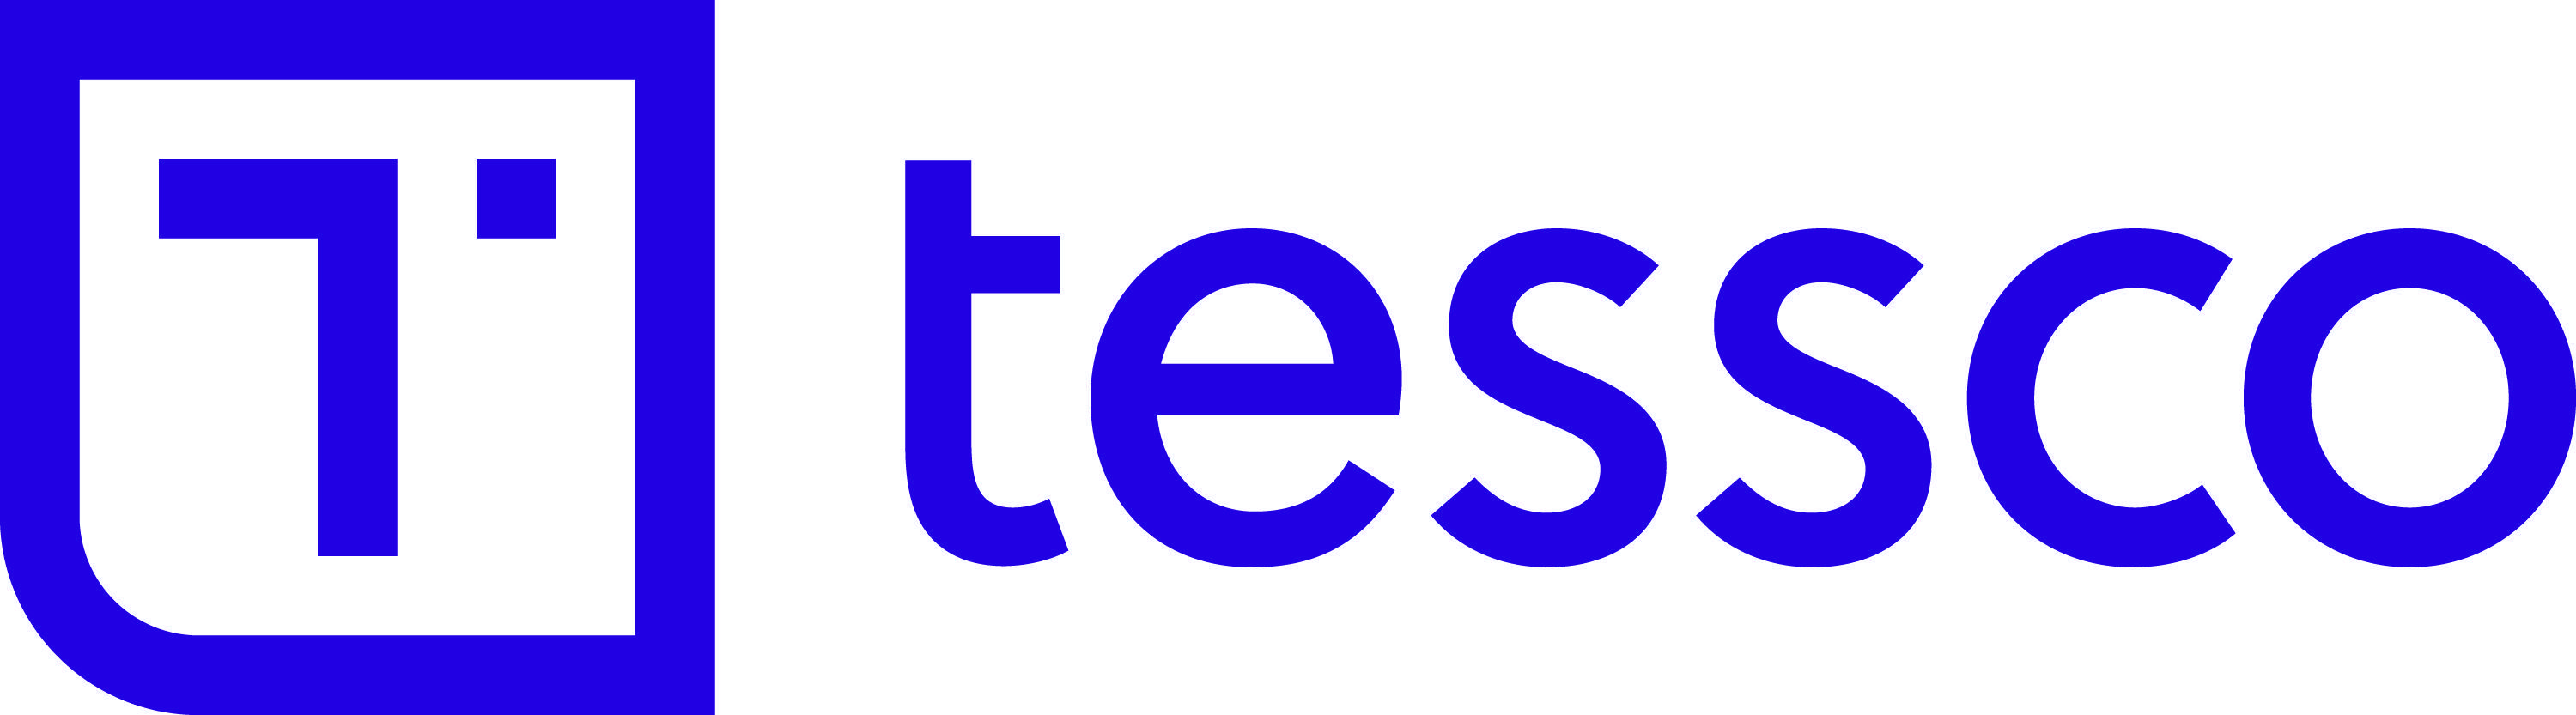 TESSCO Logo - web.signamax.com - /productphotos/Signamax-Logo/Additional Logos/Tessco/